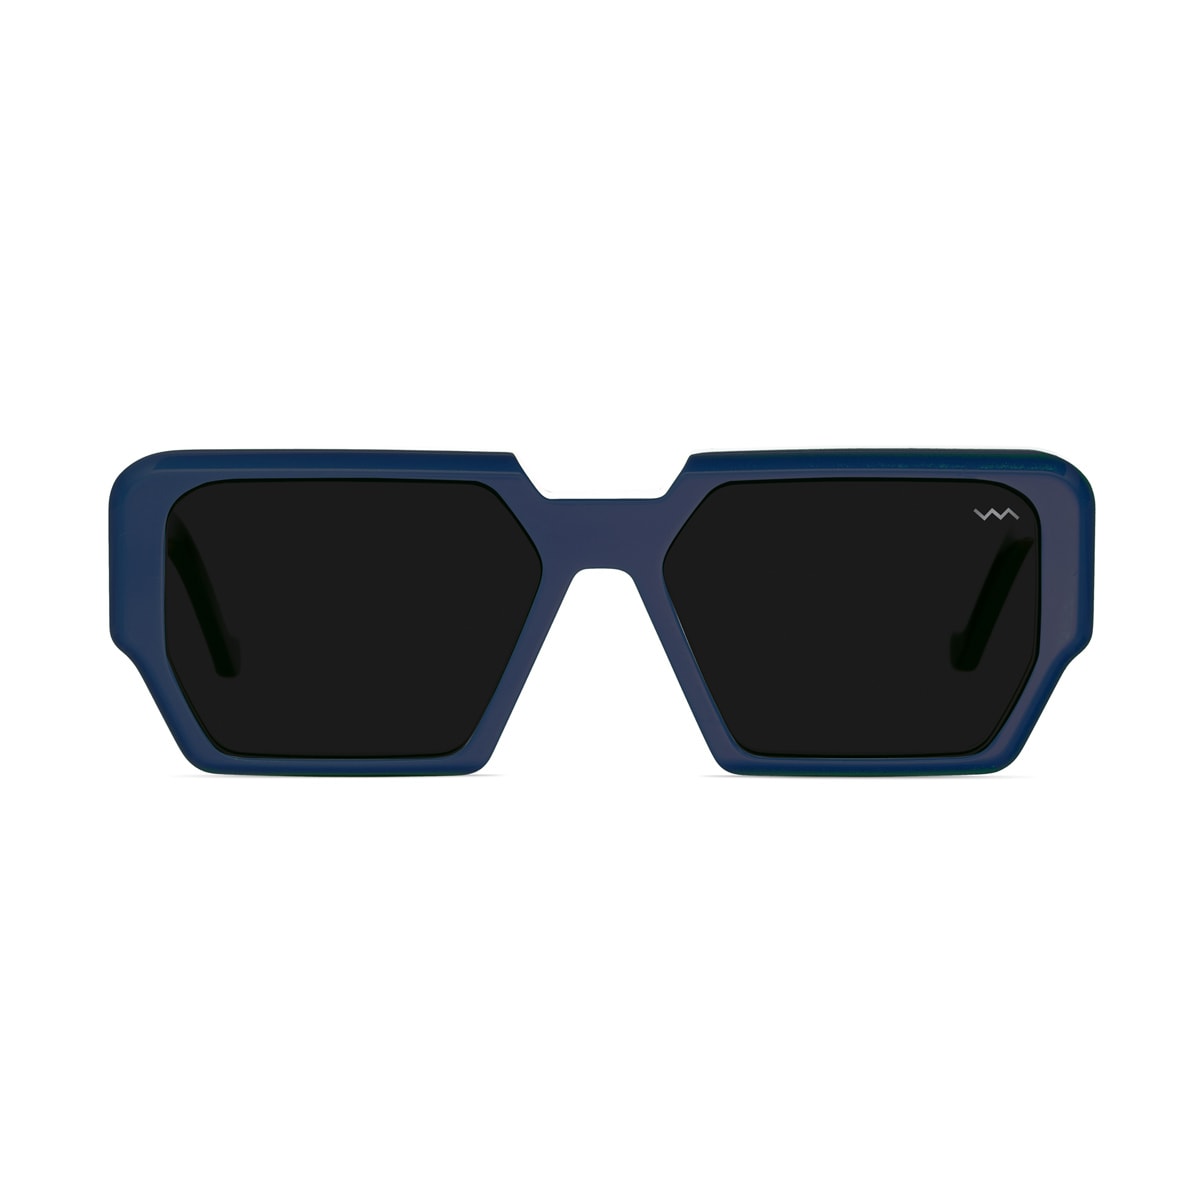 Wl0065 White Label Blue Navy Sunglasses